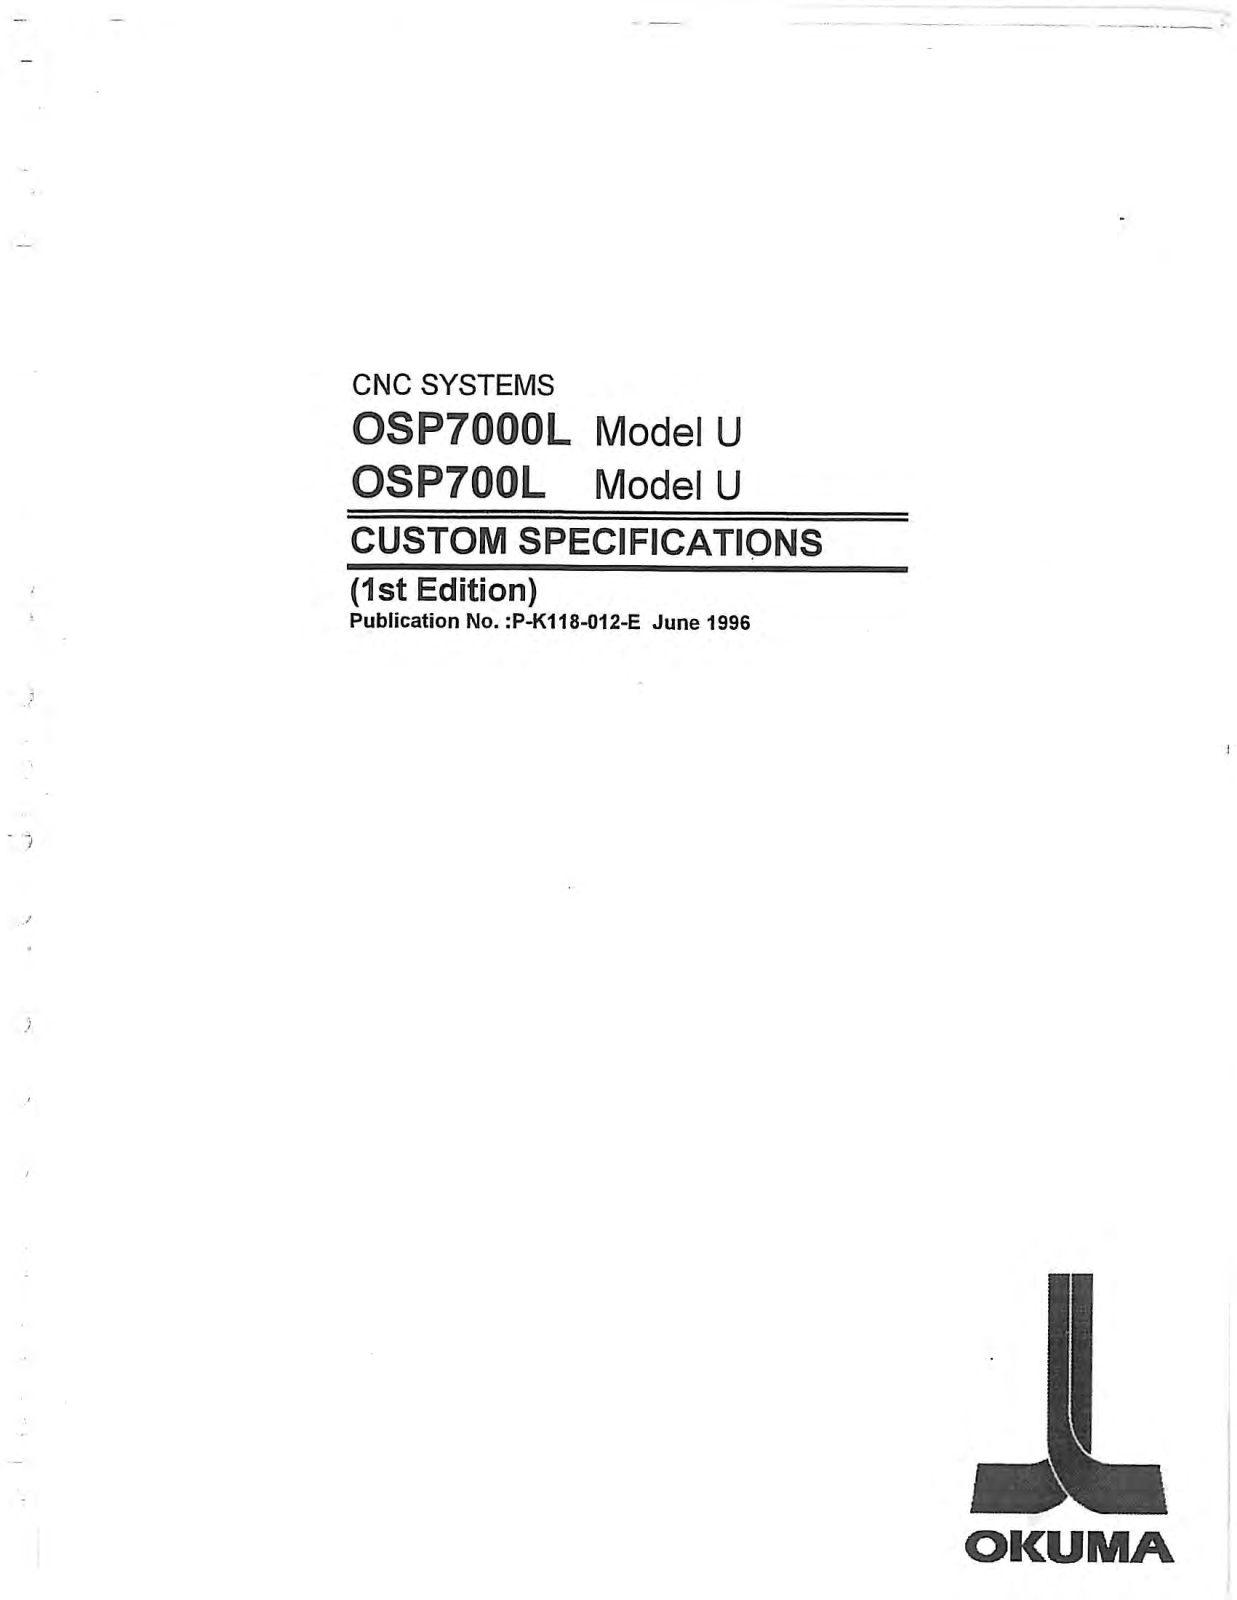 okuma OSP7000L u Specification Manual